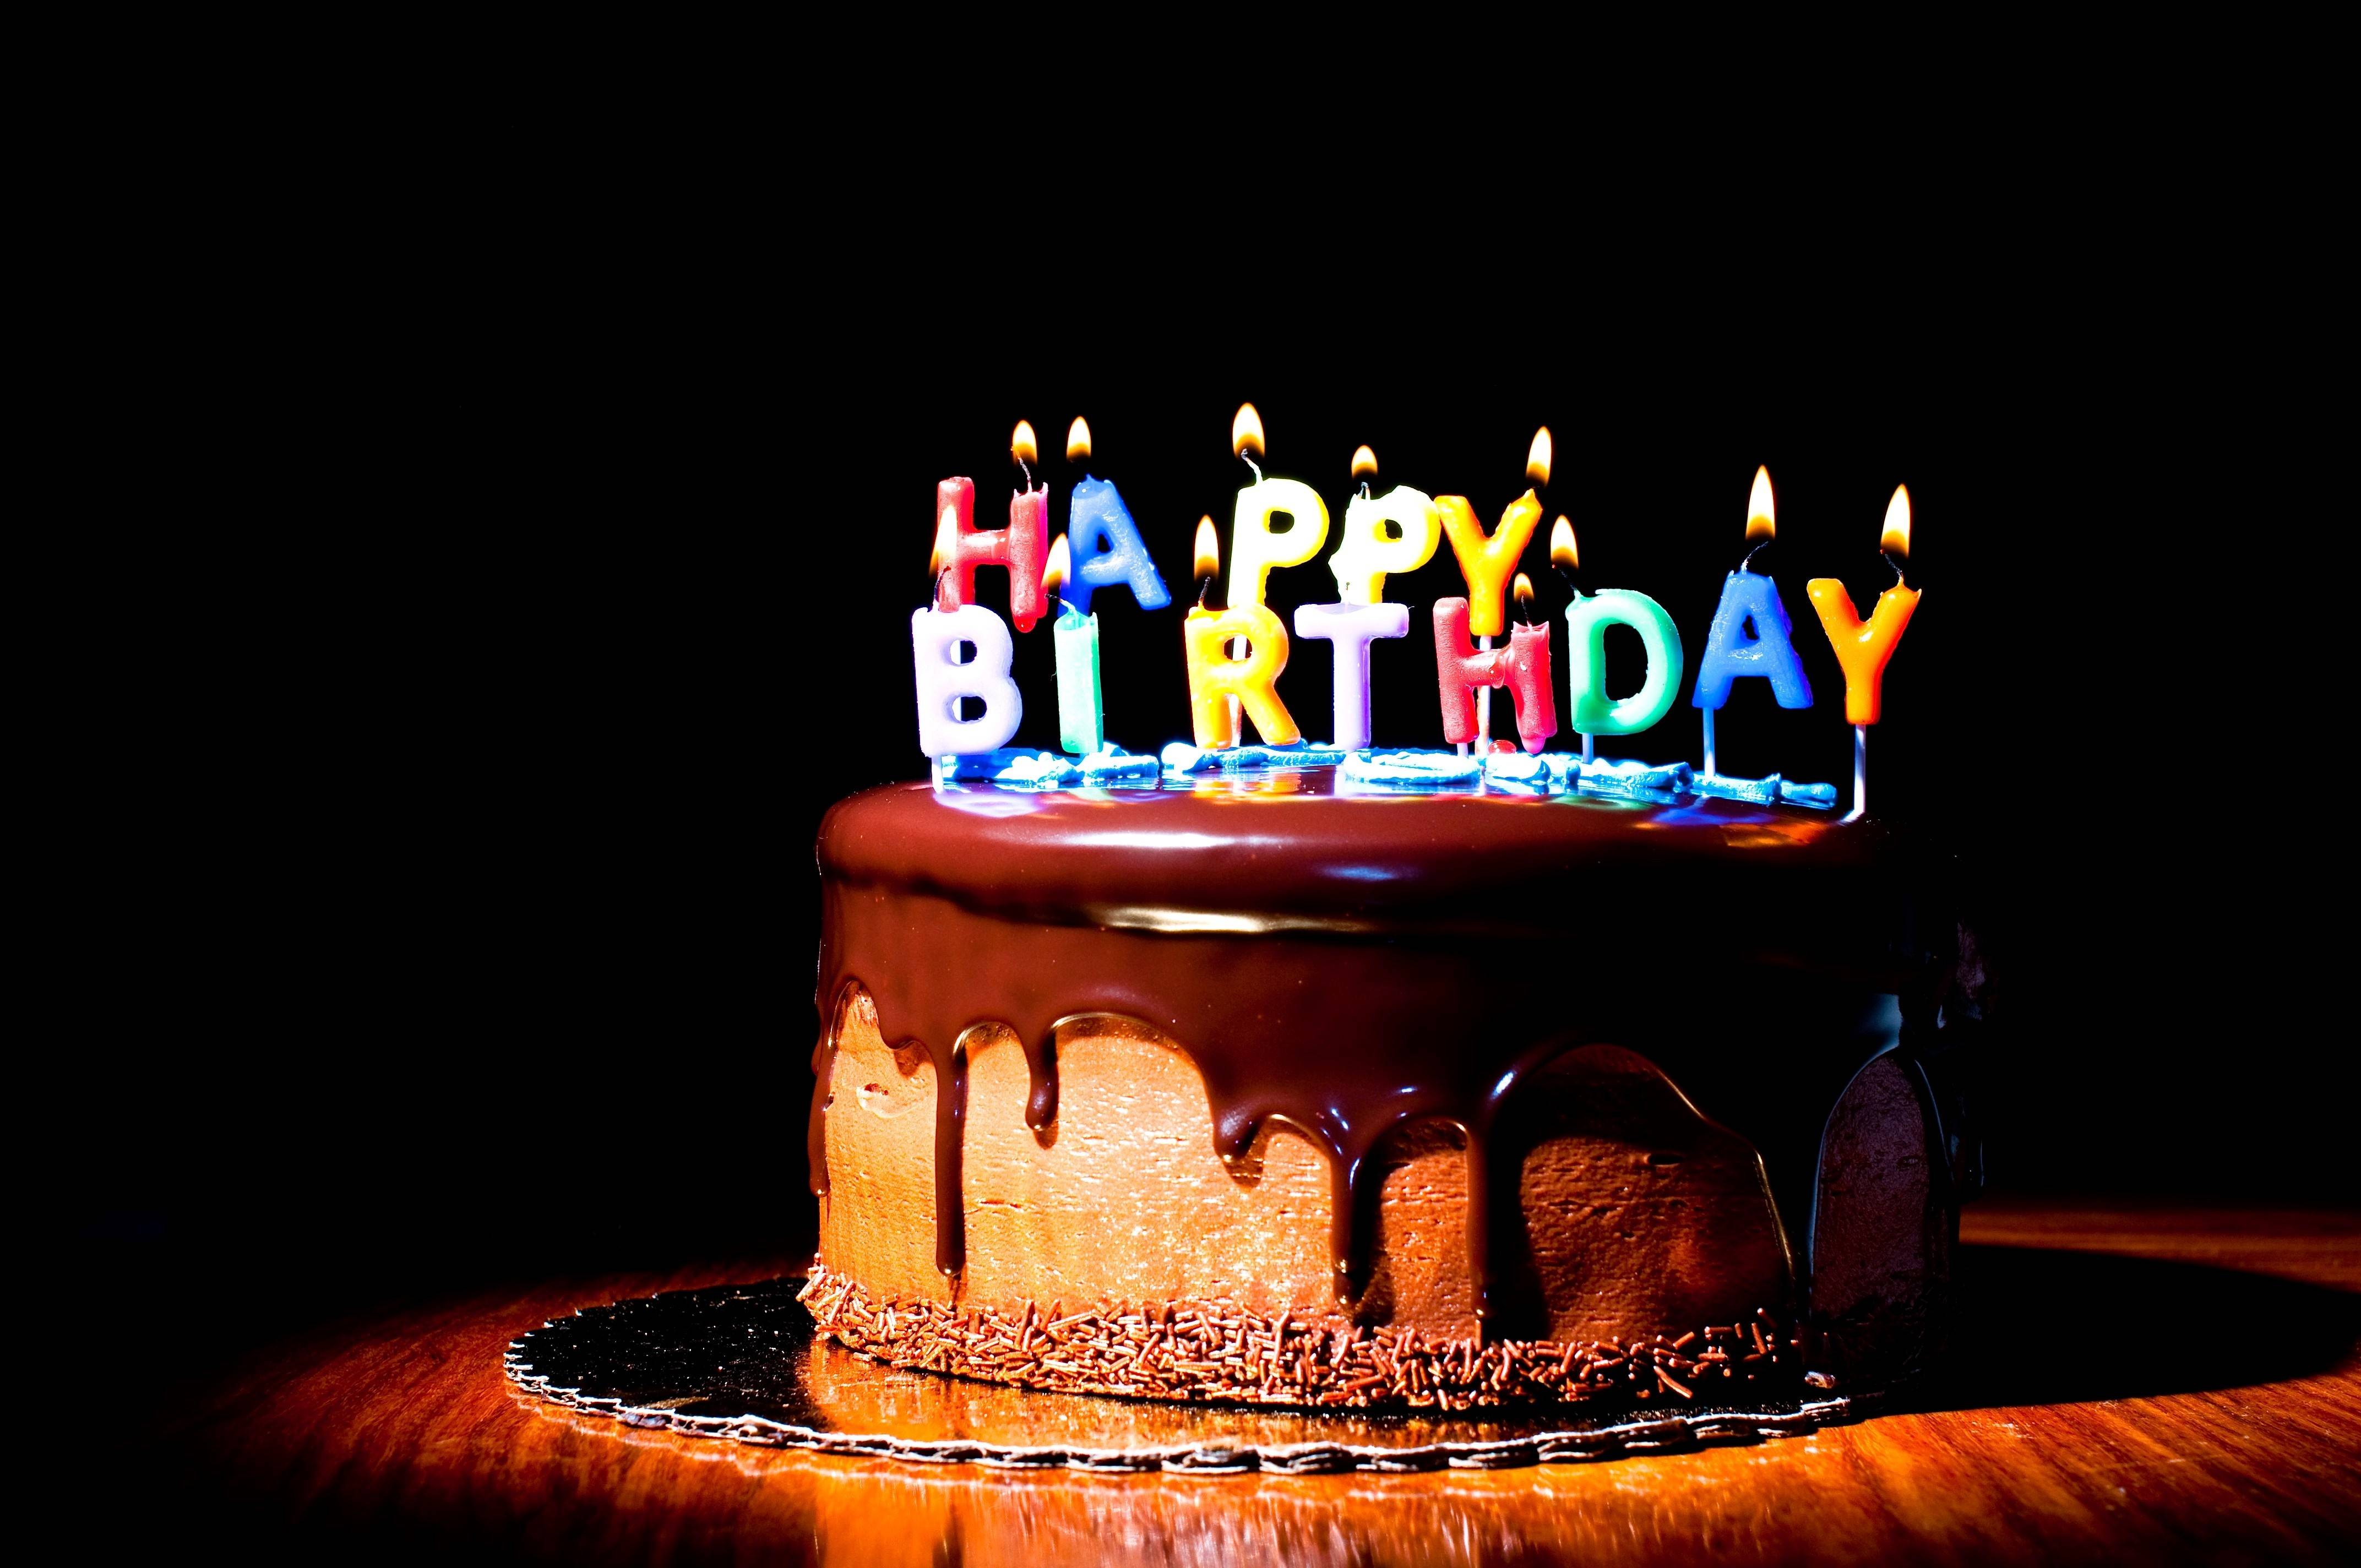 Happy Birthday Wish on Cake Wallpaper for Desktop PC